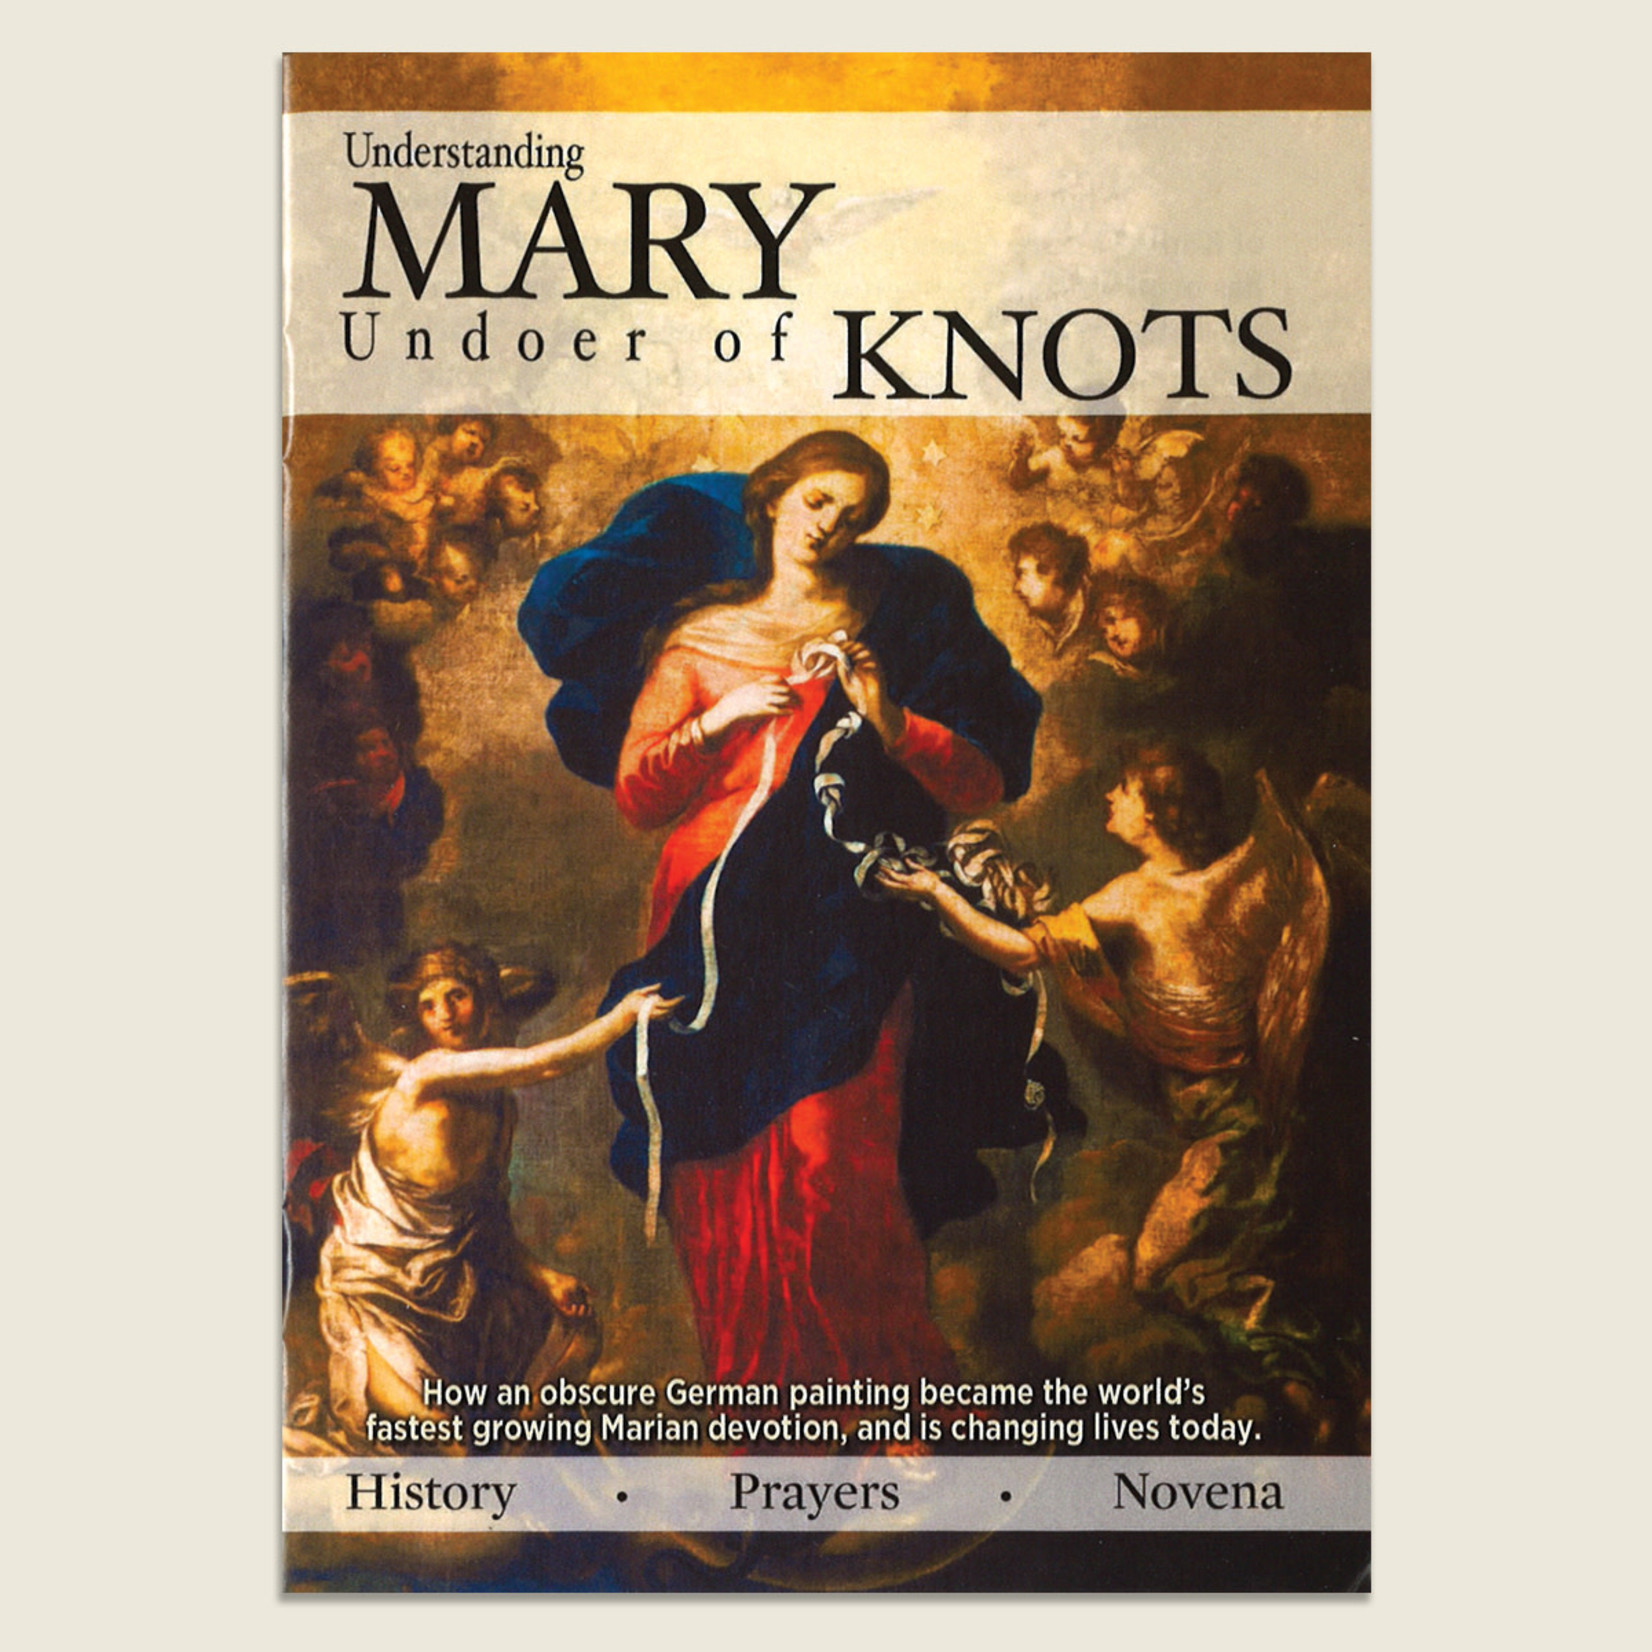 Understand Mary Undoer Of Knots